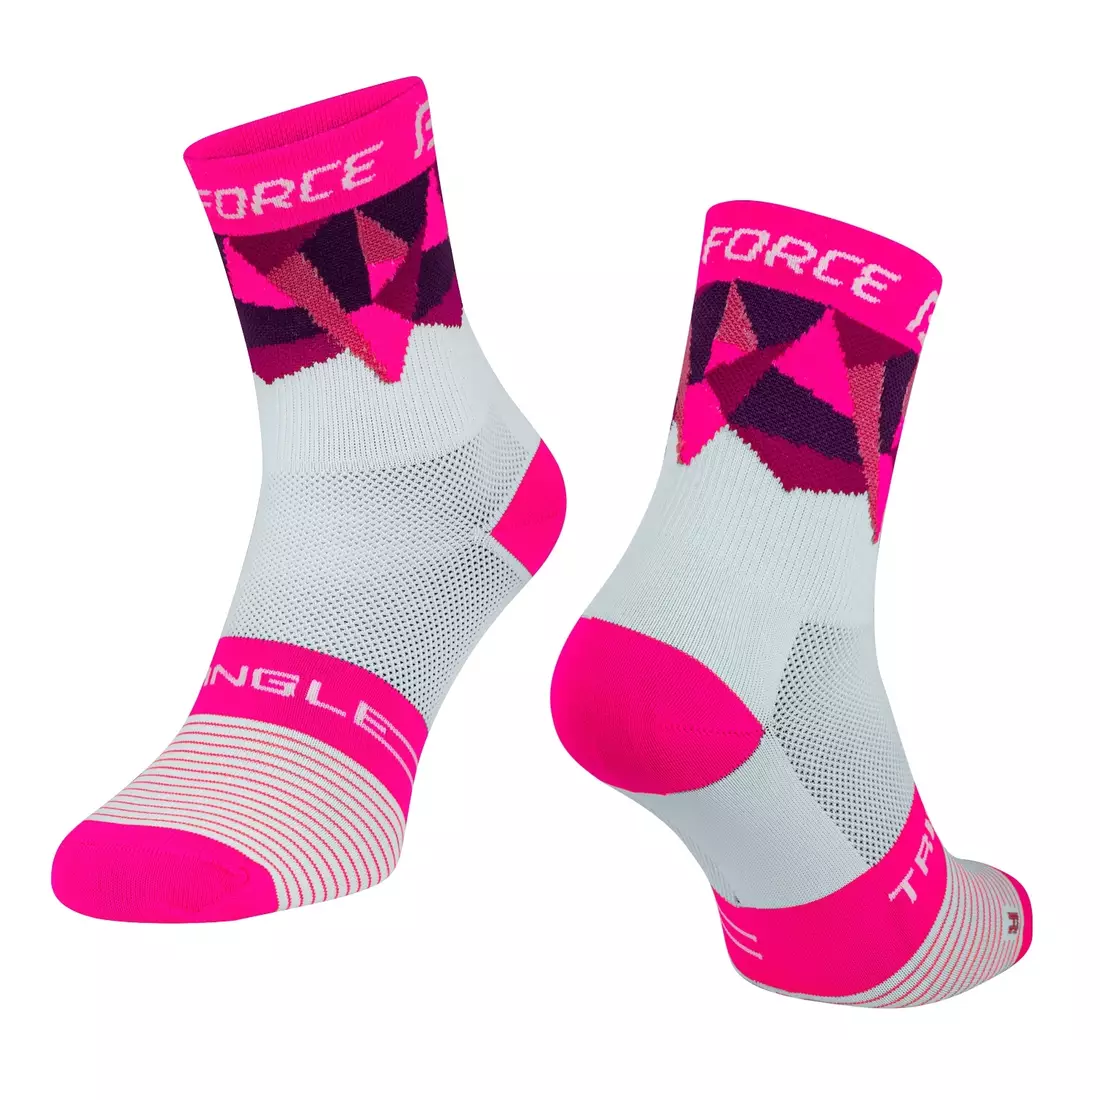 FORCE TRIANGLE cyklistické/športové ponožky, biela a ružová